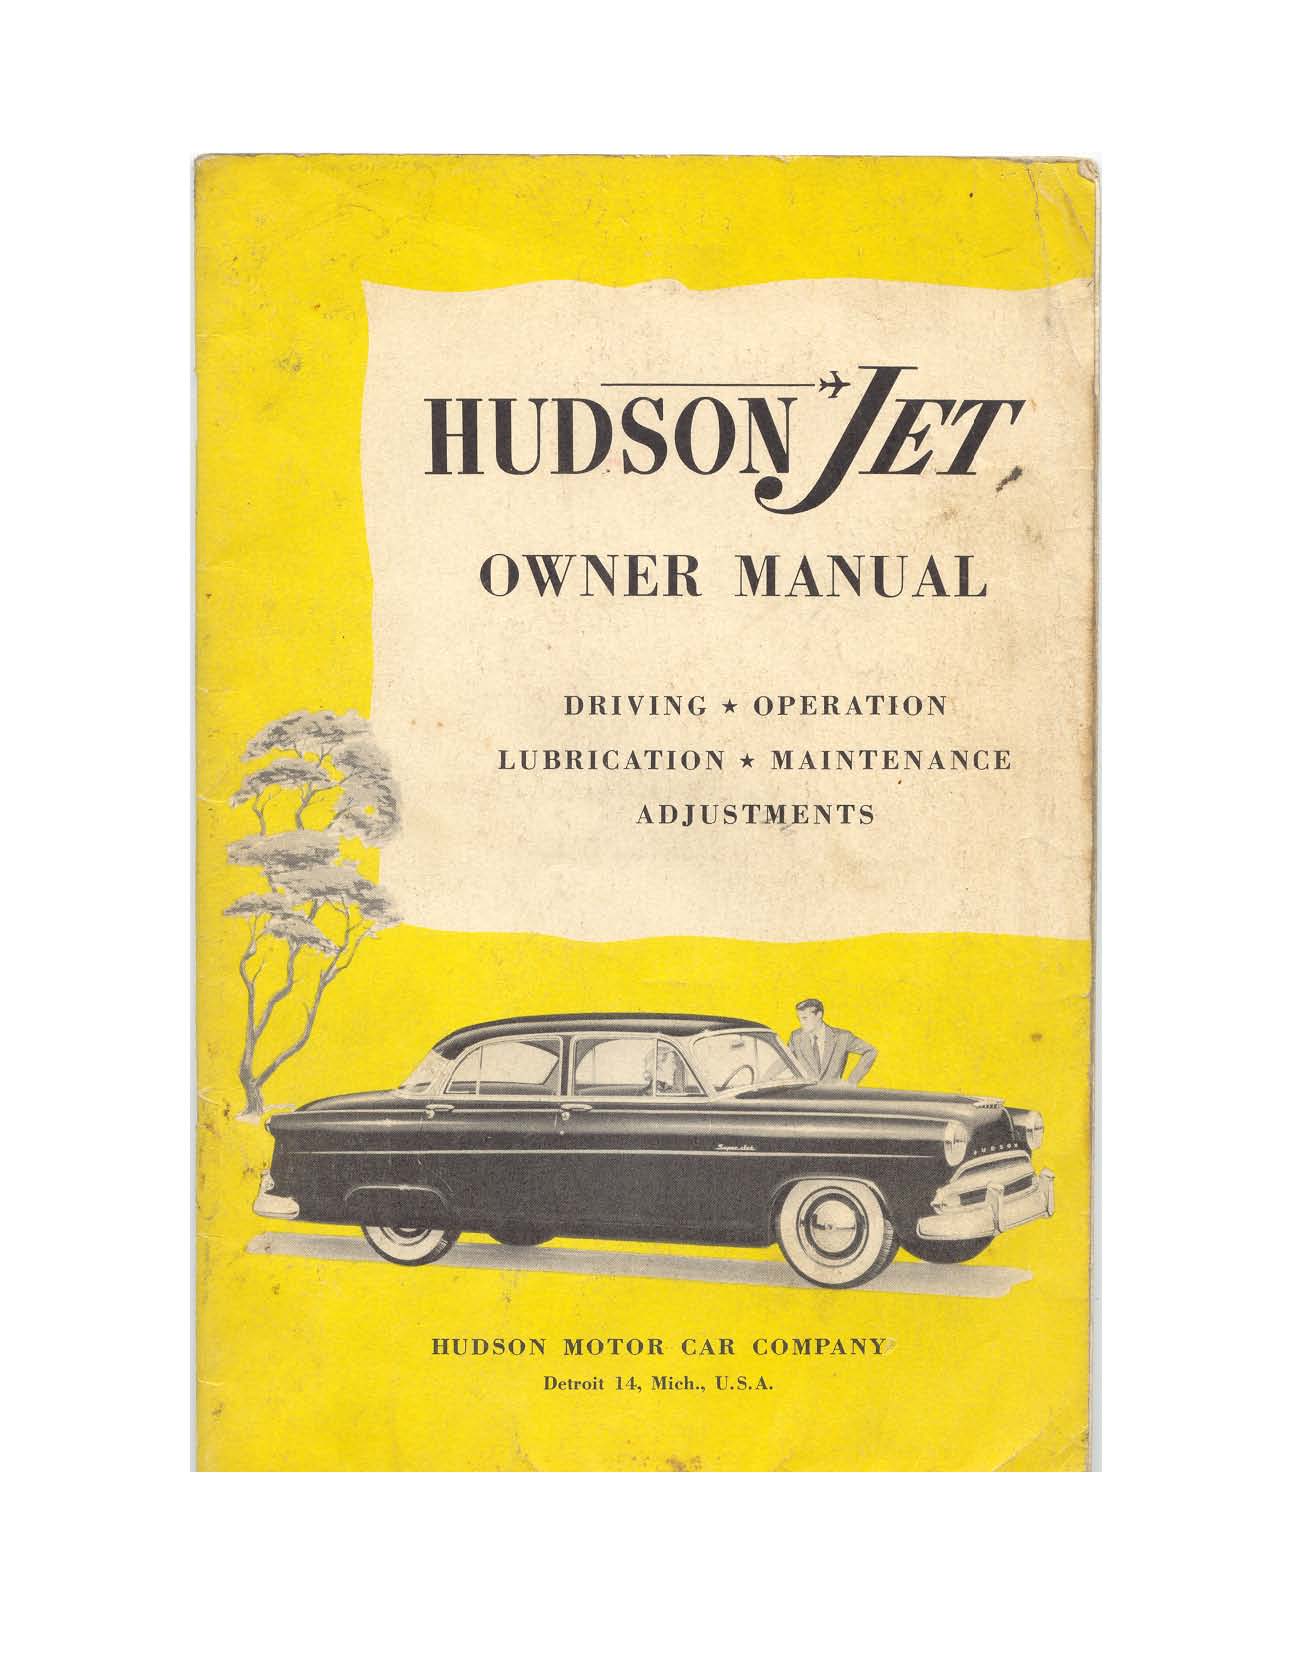 1953 Hudson Jet Owners Manual